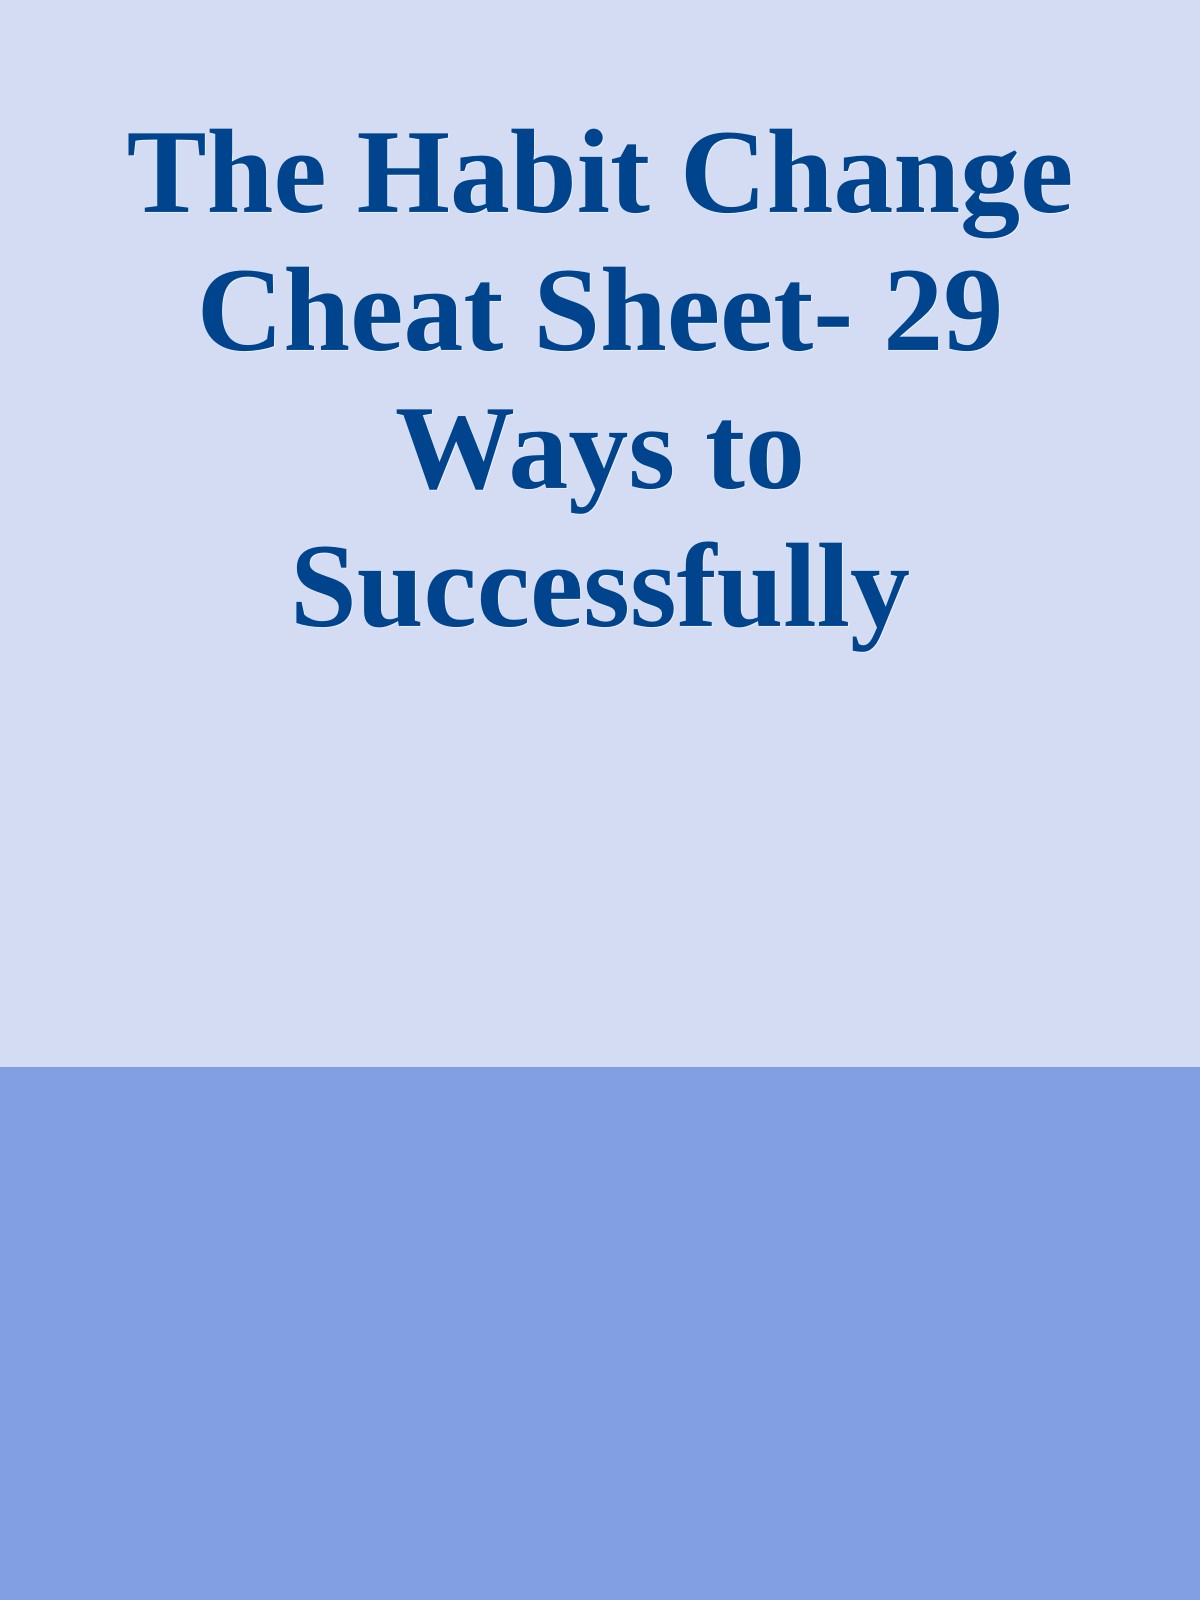 The Habit Change Cheat Sheet- 29 Ways to Successfully Ingrain a Behavior